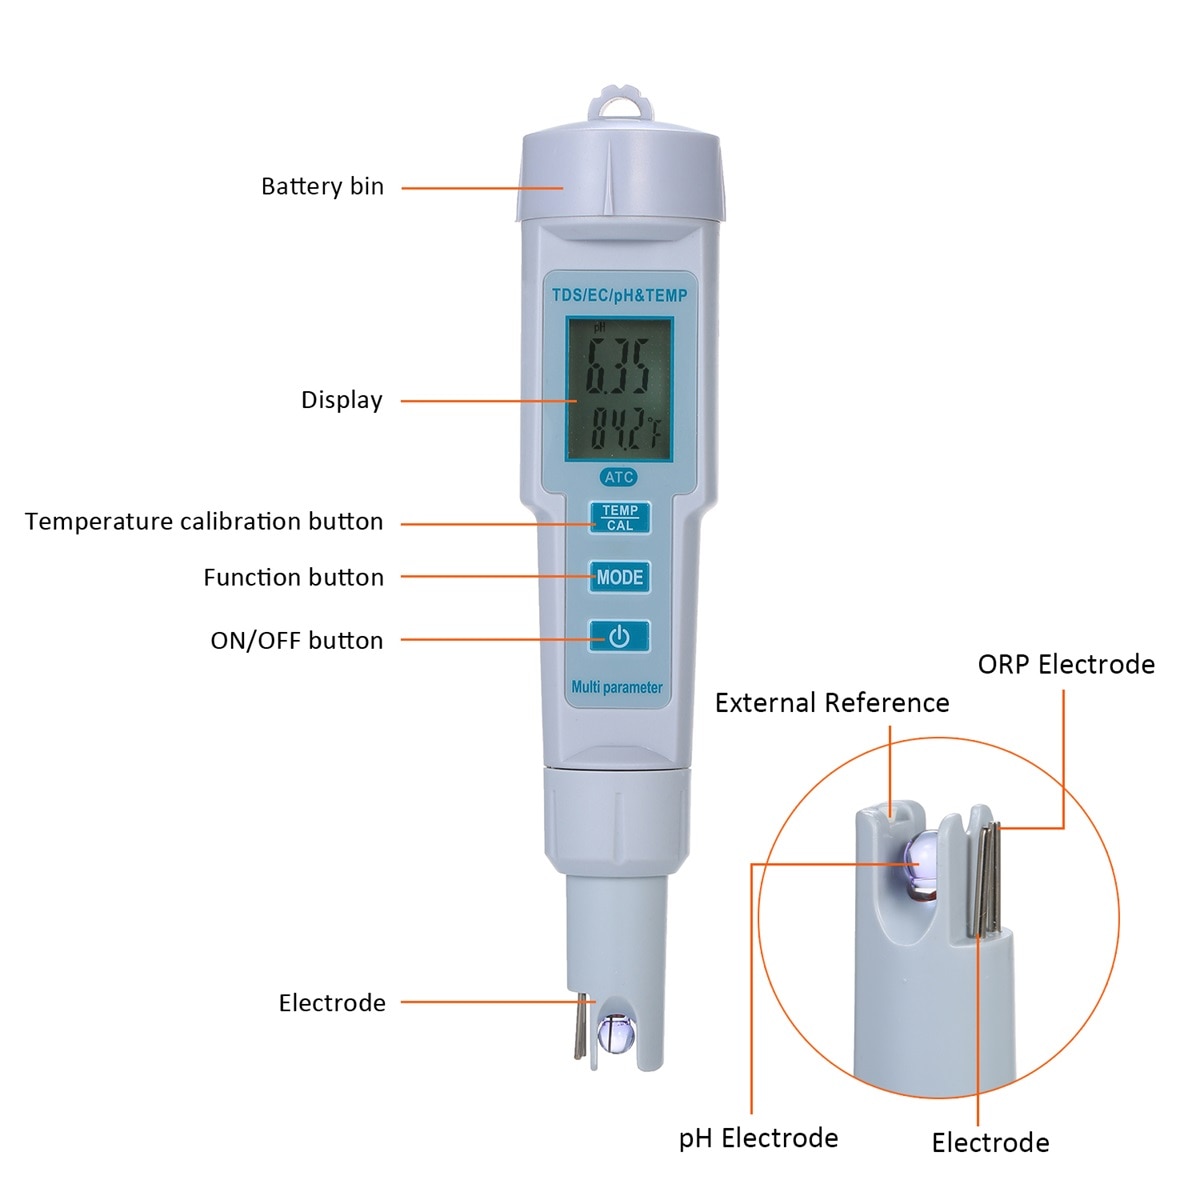 4 in 1 Water Quality Tester pH/EC/TDS/Temperature Meter